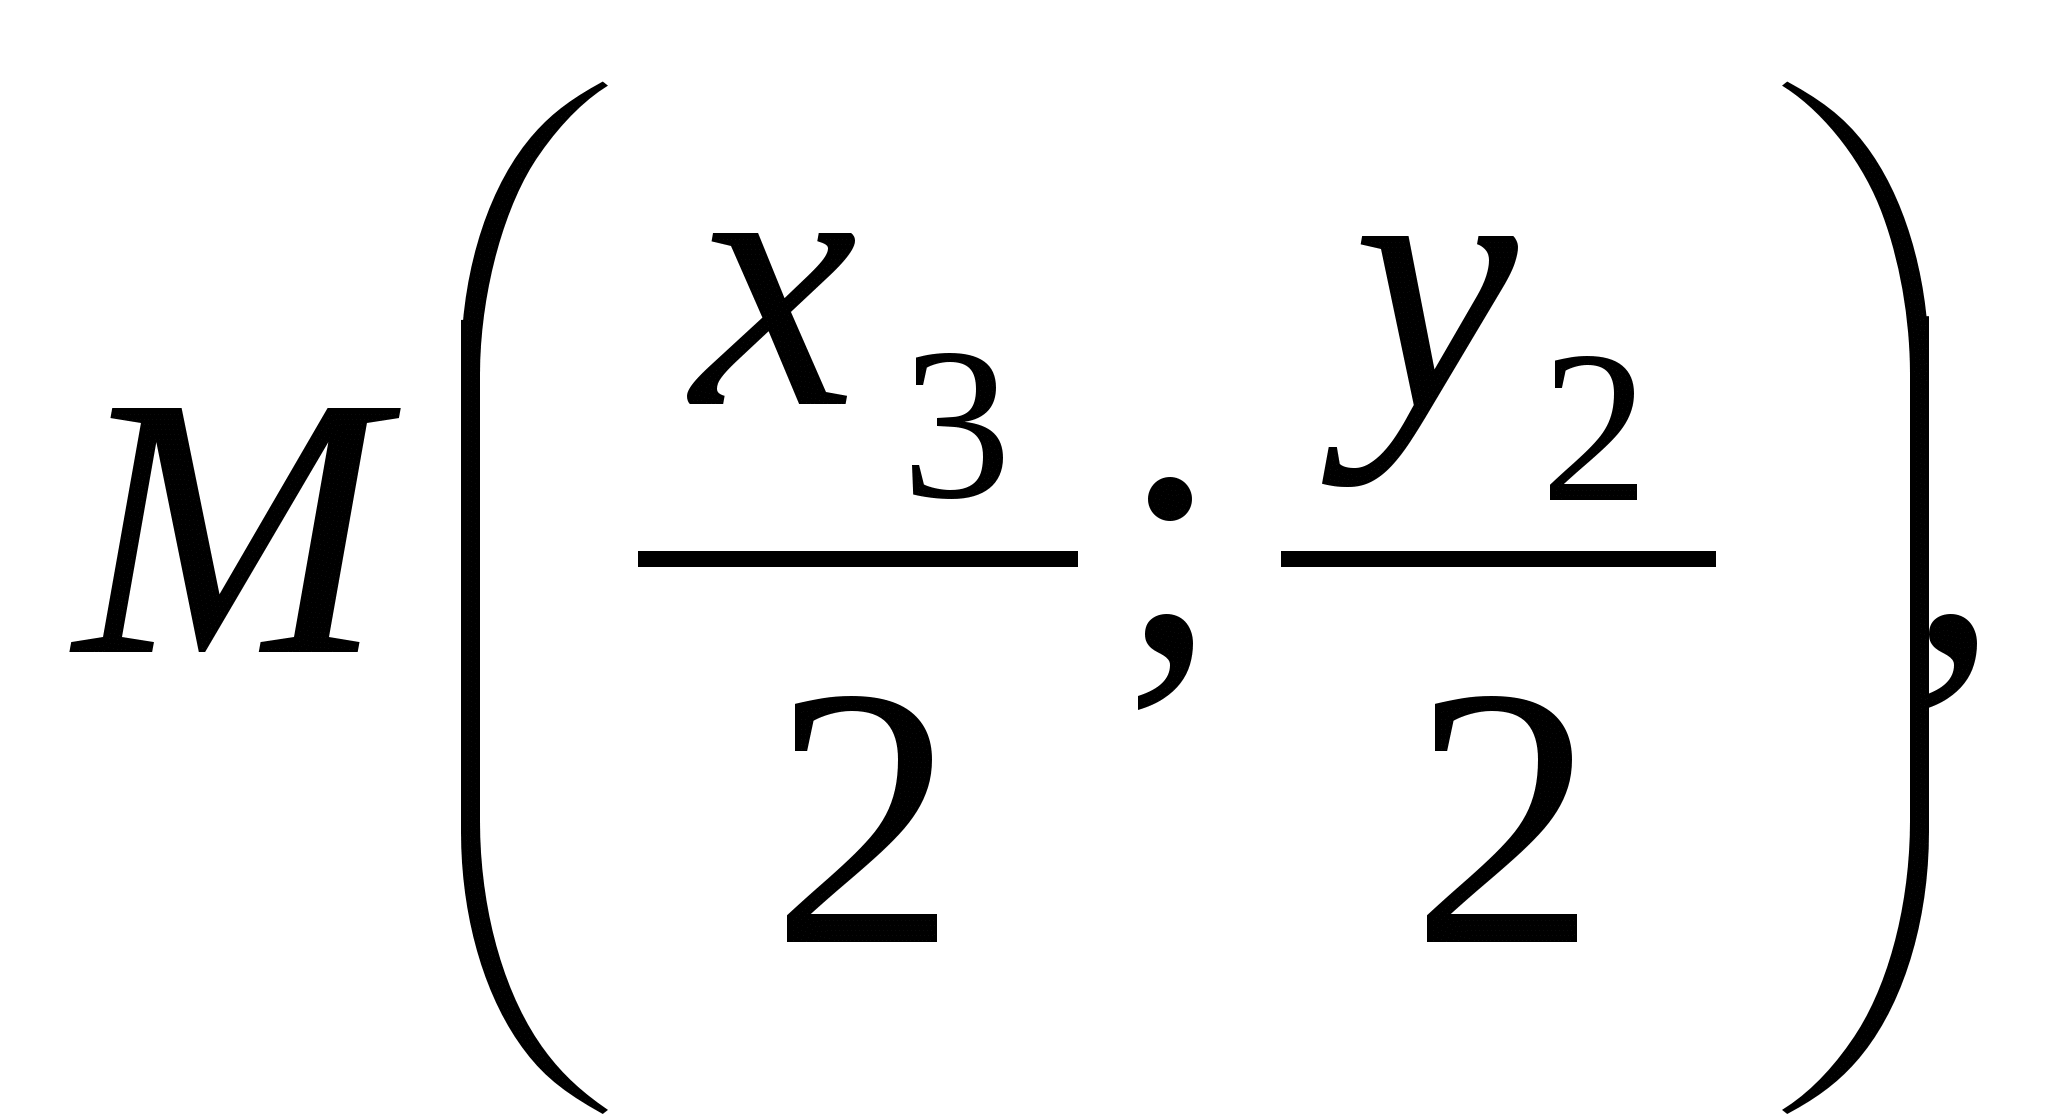 Применение метода координат при решении геометрических задач